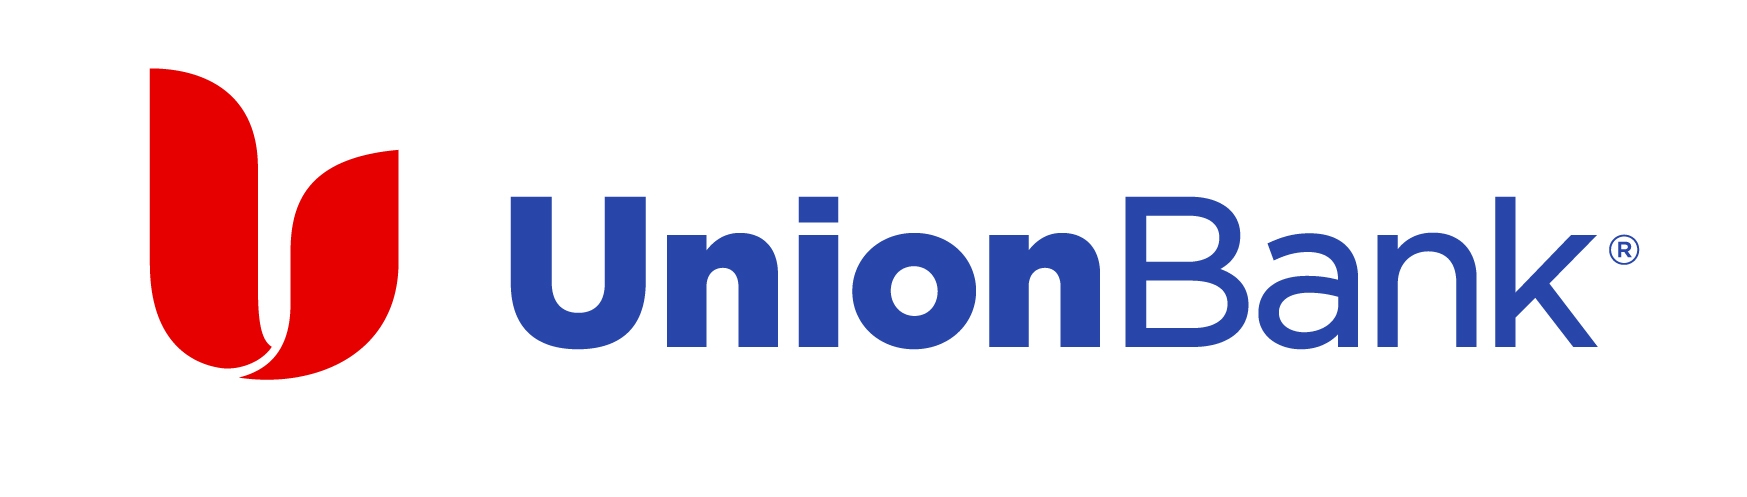 Union Bank Brand Logo